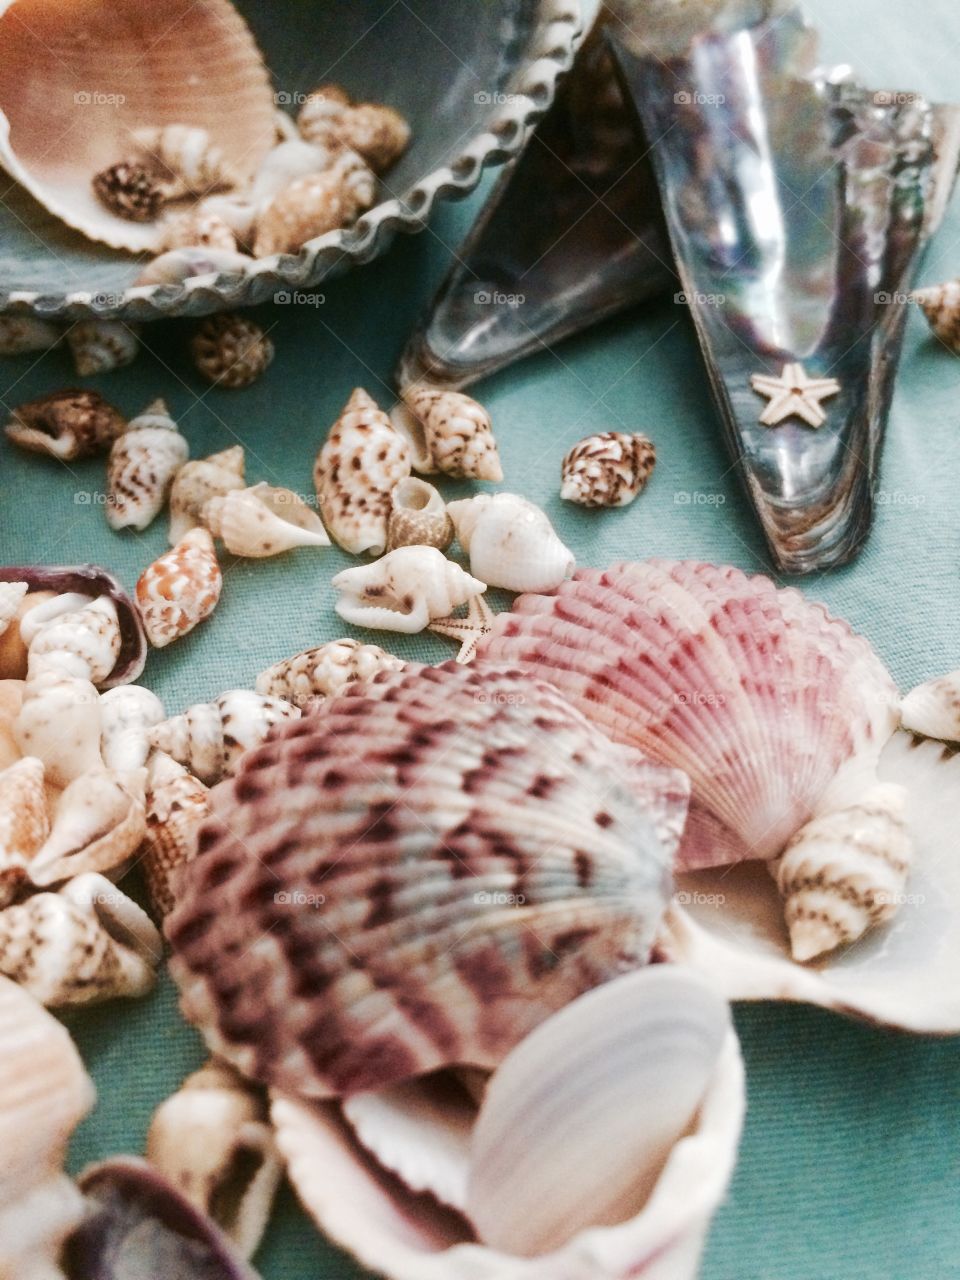 Beach collection of seashells